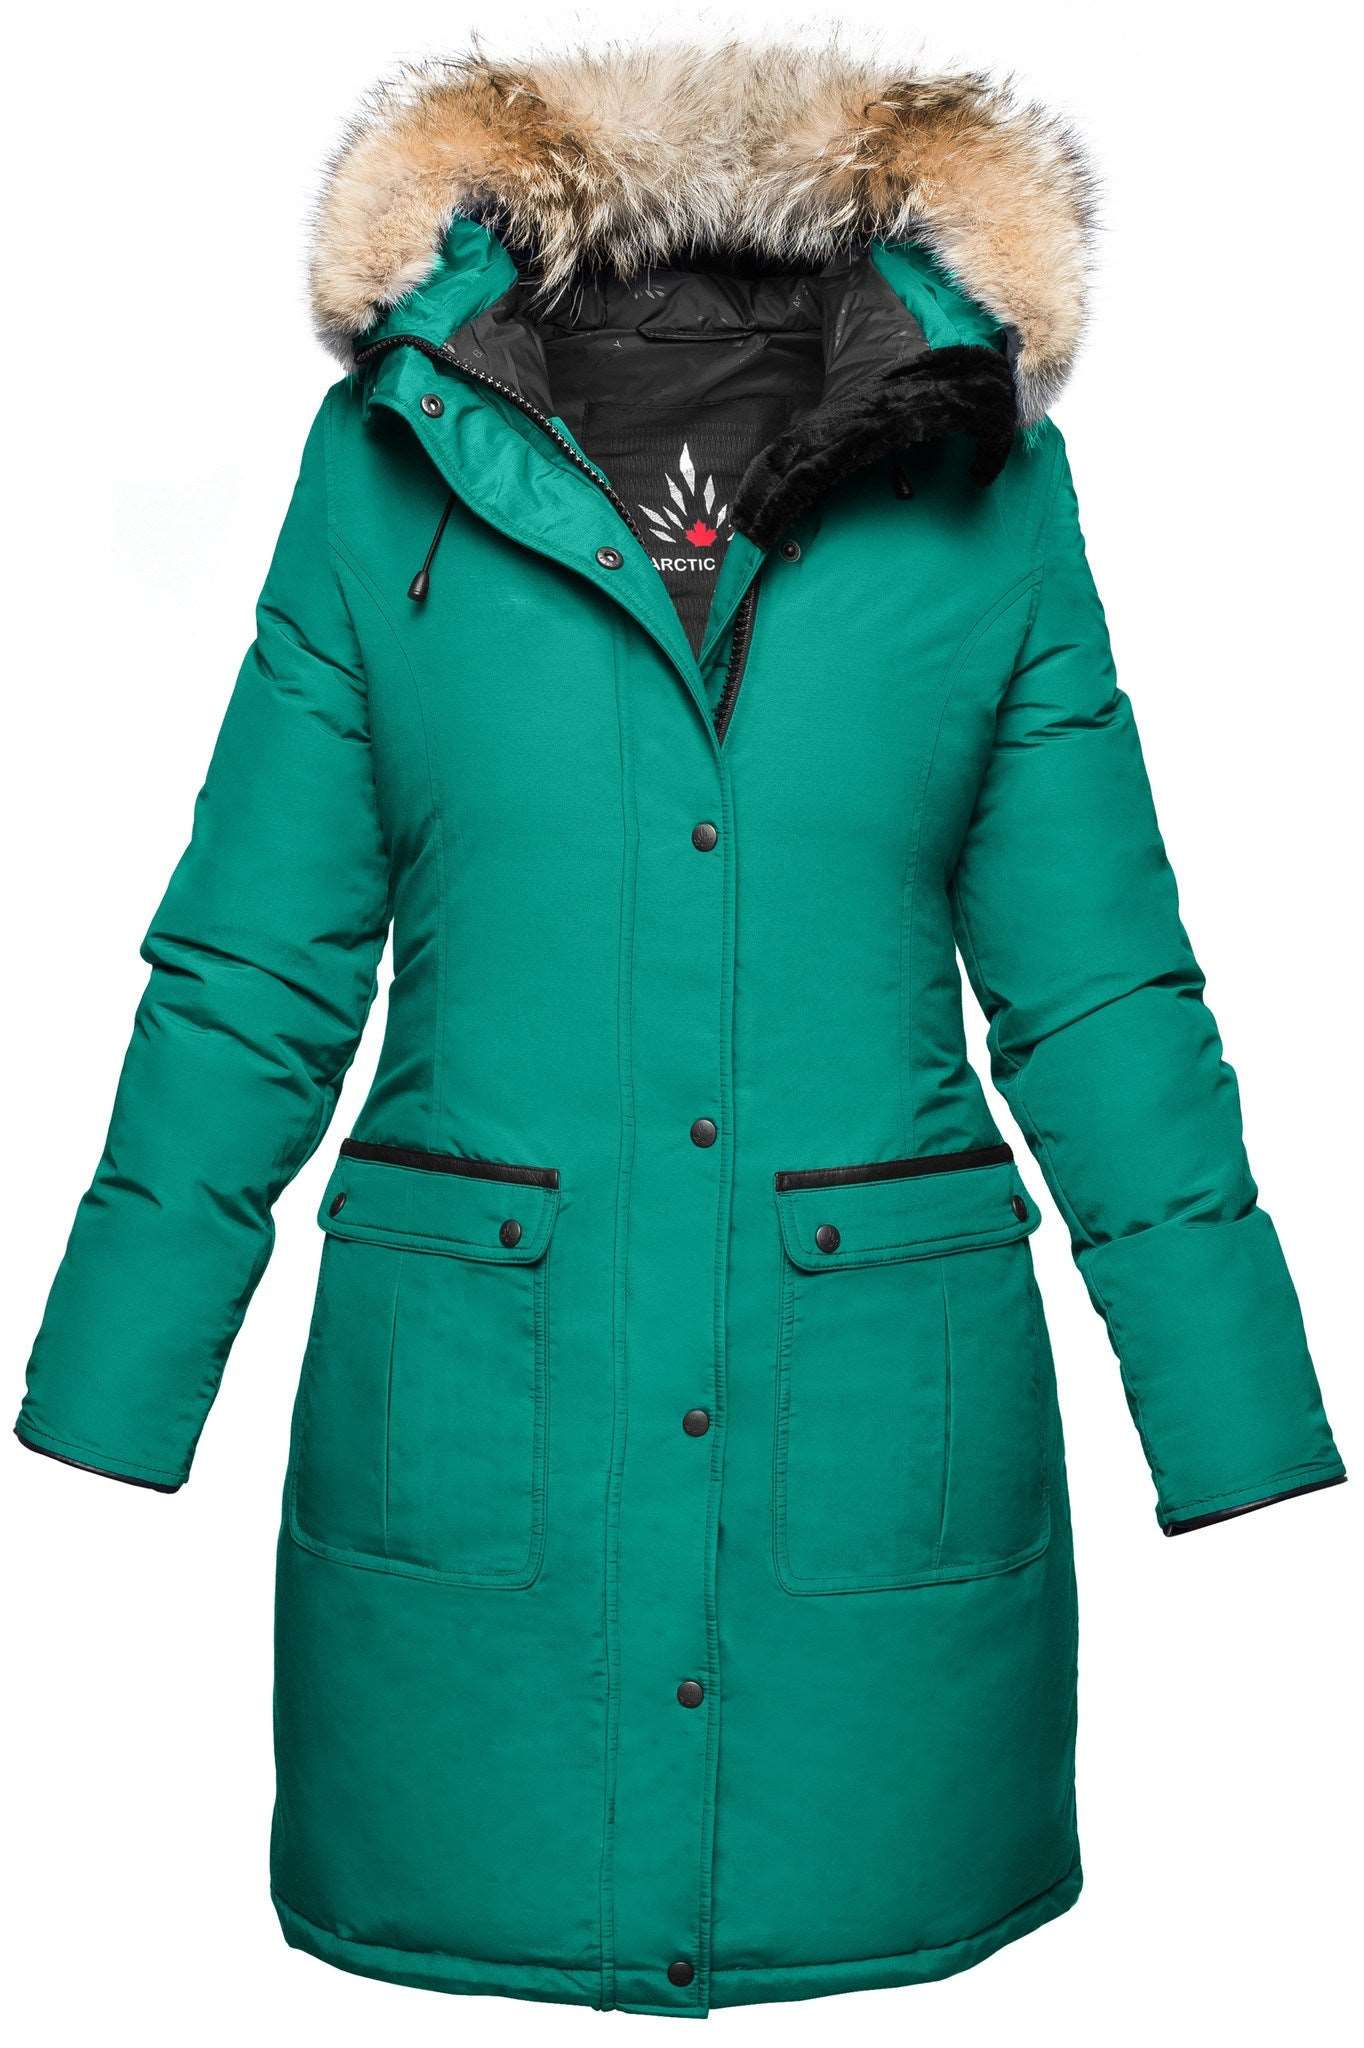 Women's Winter Jacket - Mirabella Parka